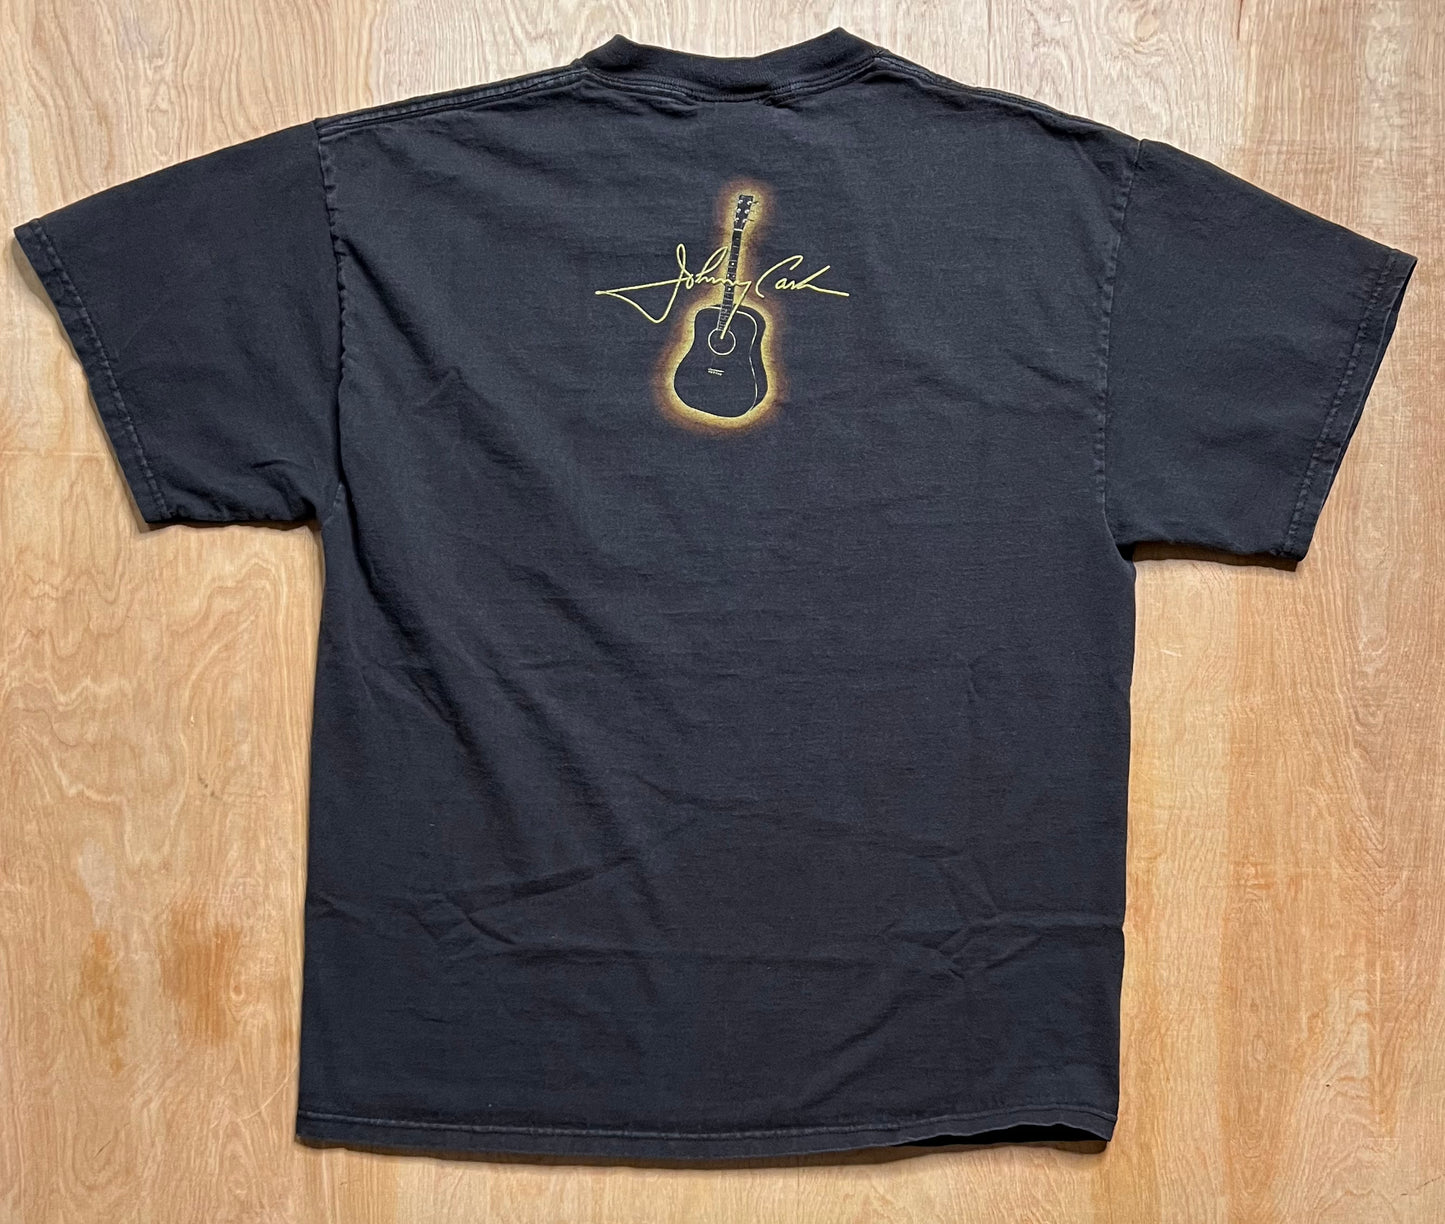 2004 Johnny Cash "Cash" T-Shirt